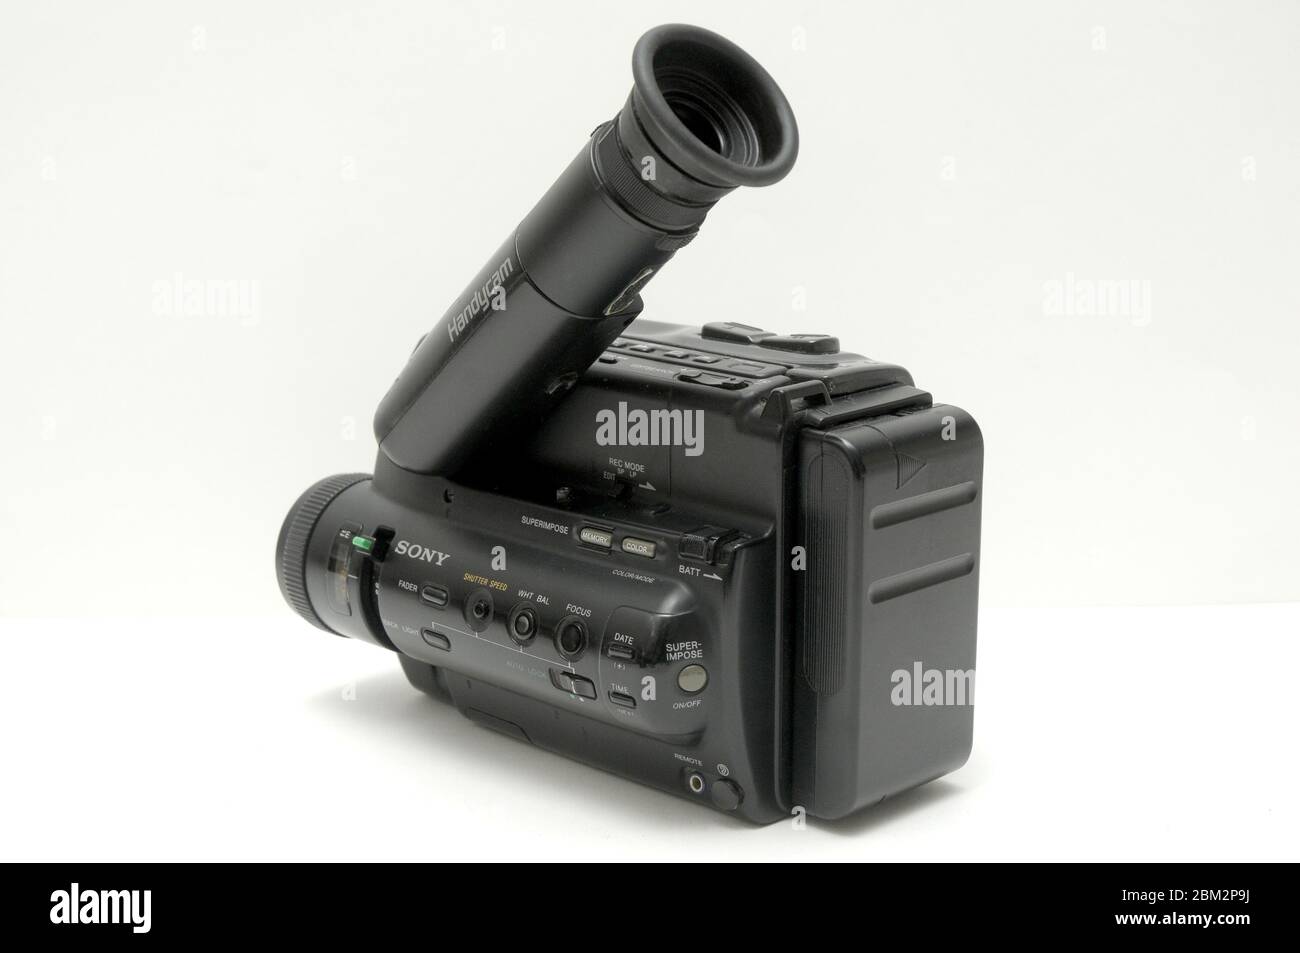 Sony Handycam Videokamera, 90er Jahre Stockfotografie - Alamy